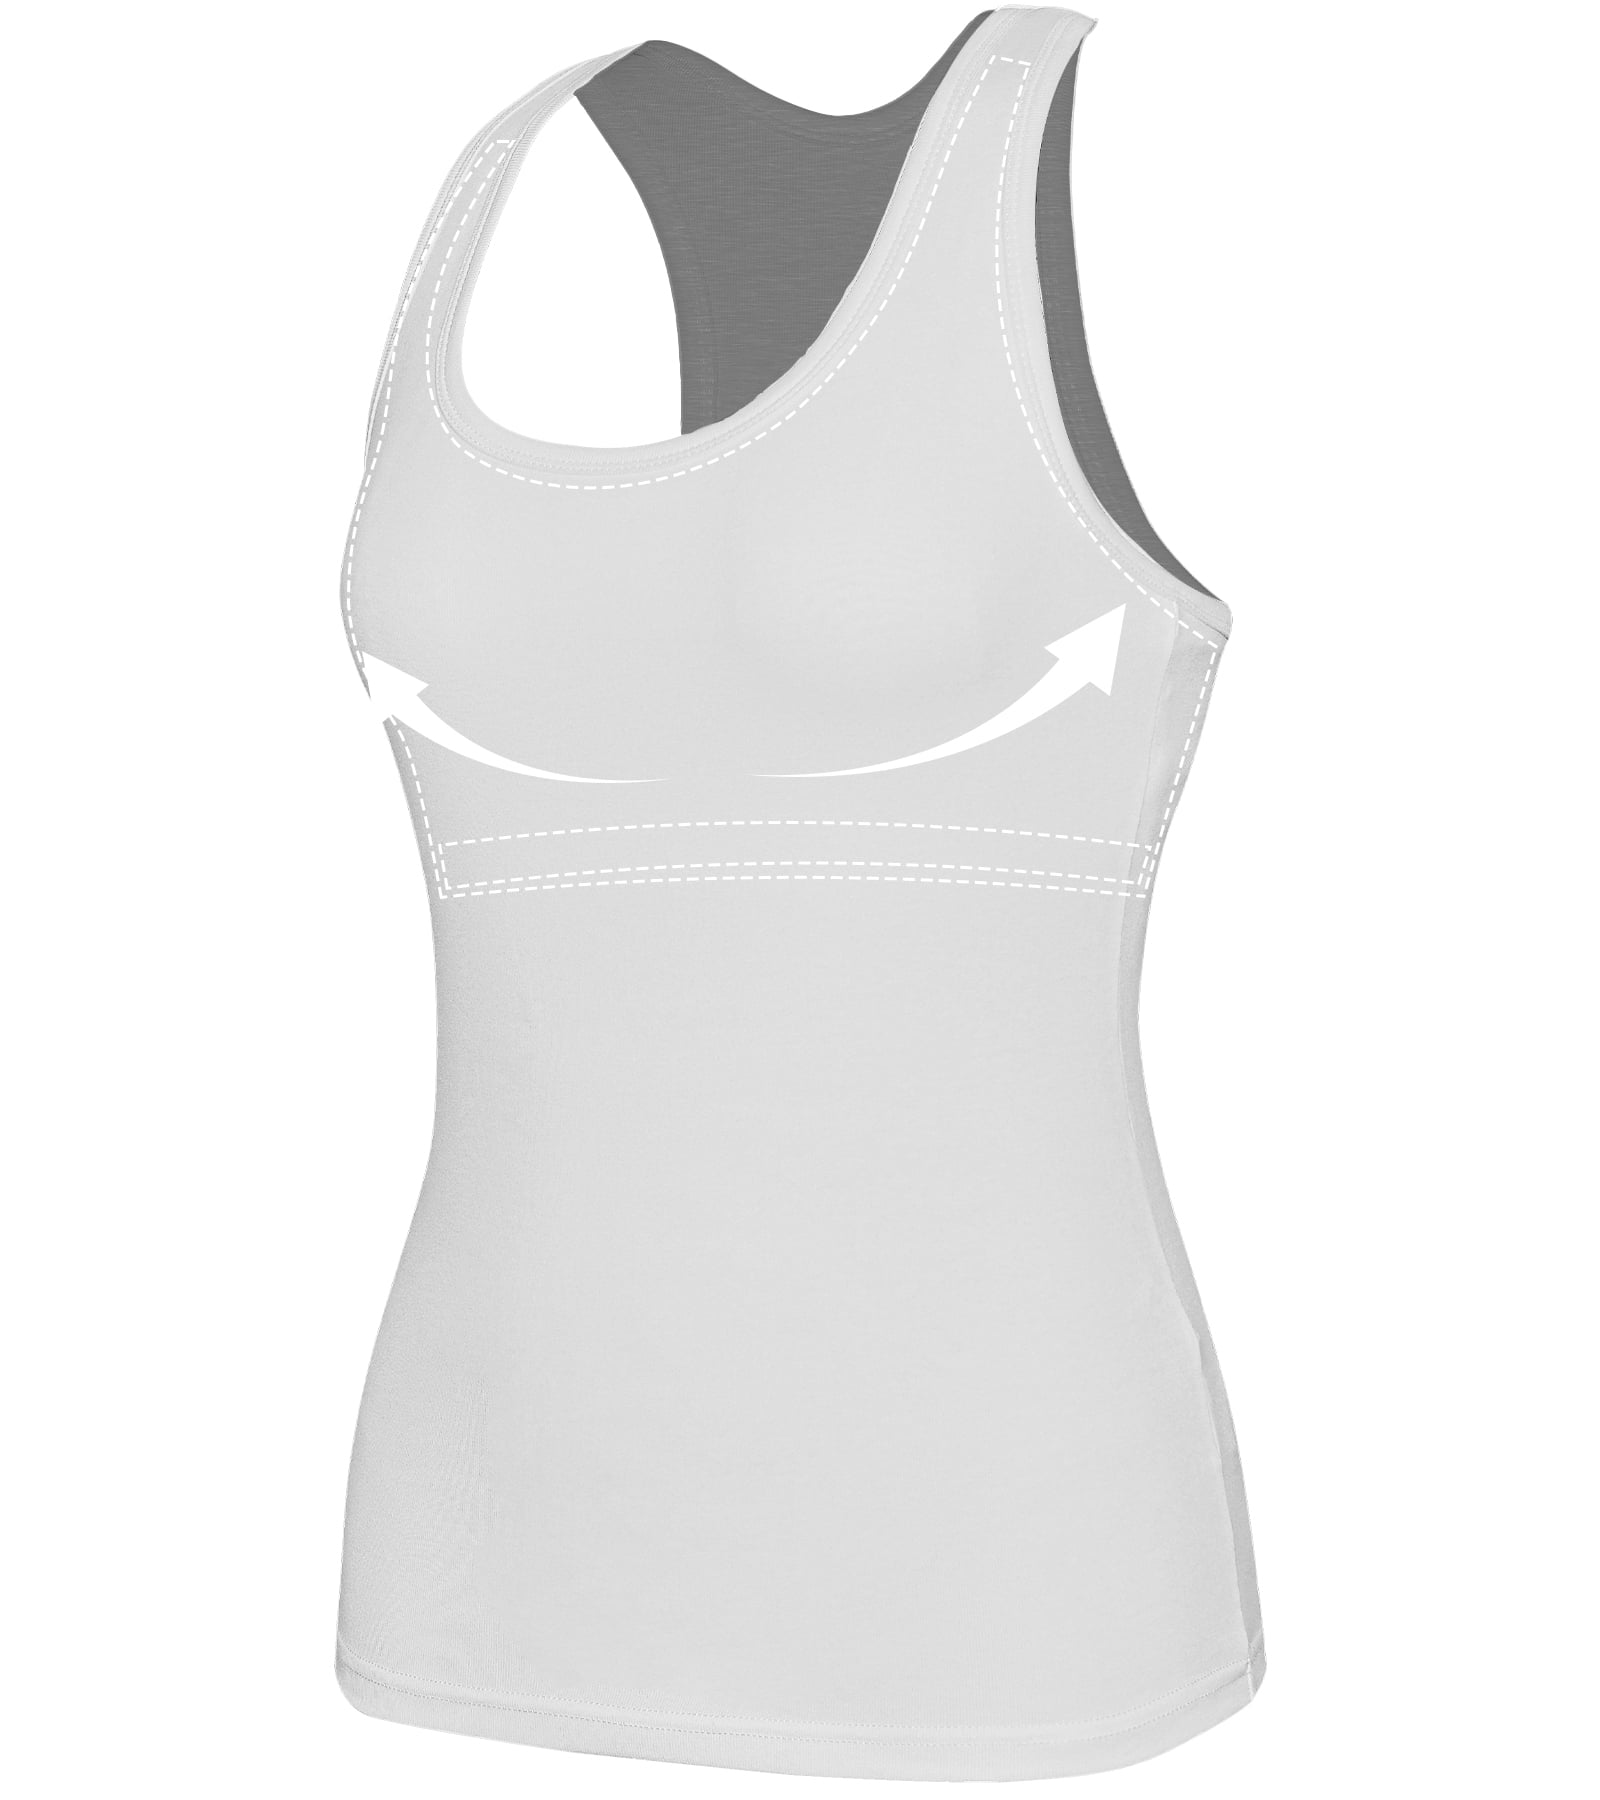 Anyfit Wear Racerback Workout Tank Tops With Shelf Bra for Women Basic  Athletic Tanks Yoga Undershirt Summer Sleeveless Exercise Tops Blue 3XL 